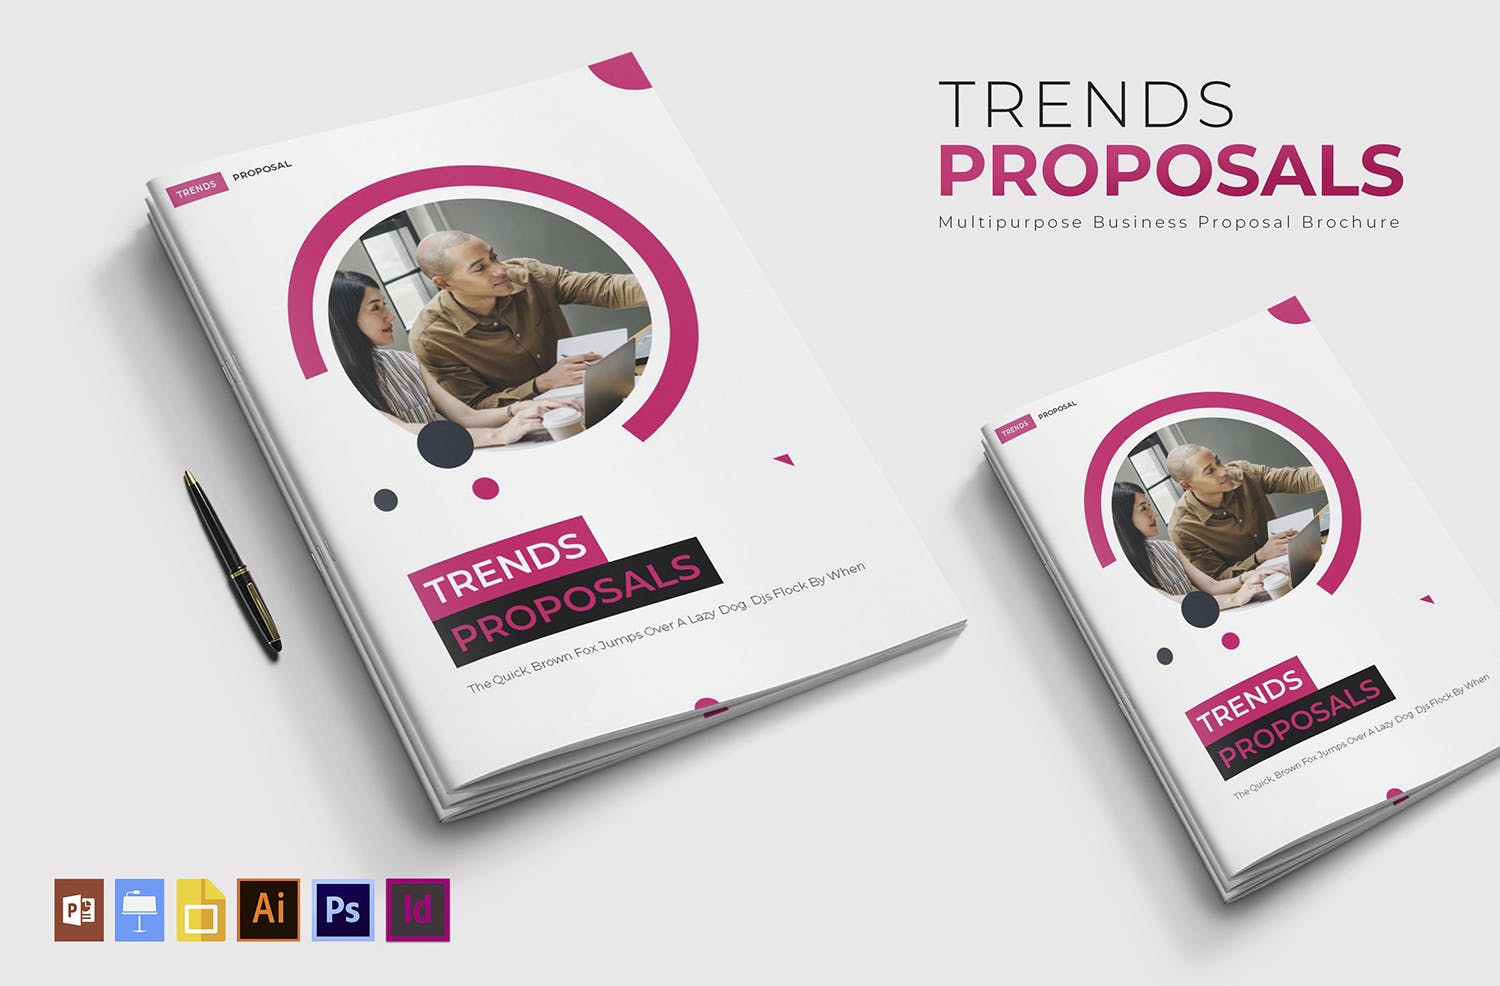 招标提案书设计模板 Trends | Proposal Brochure插图(2)